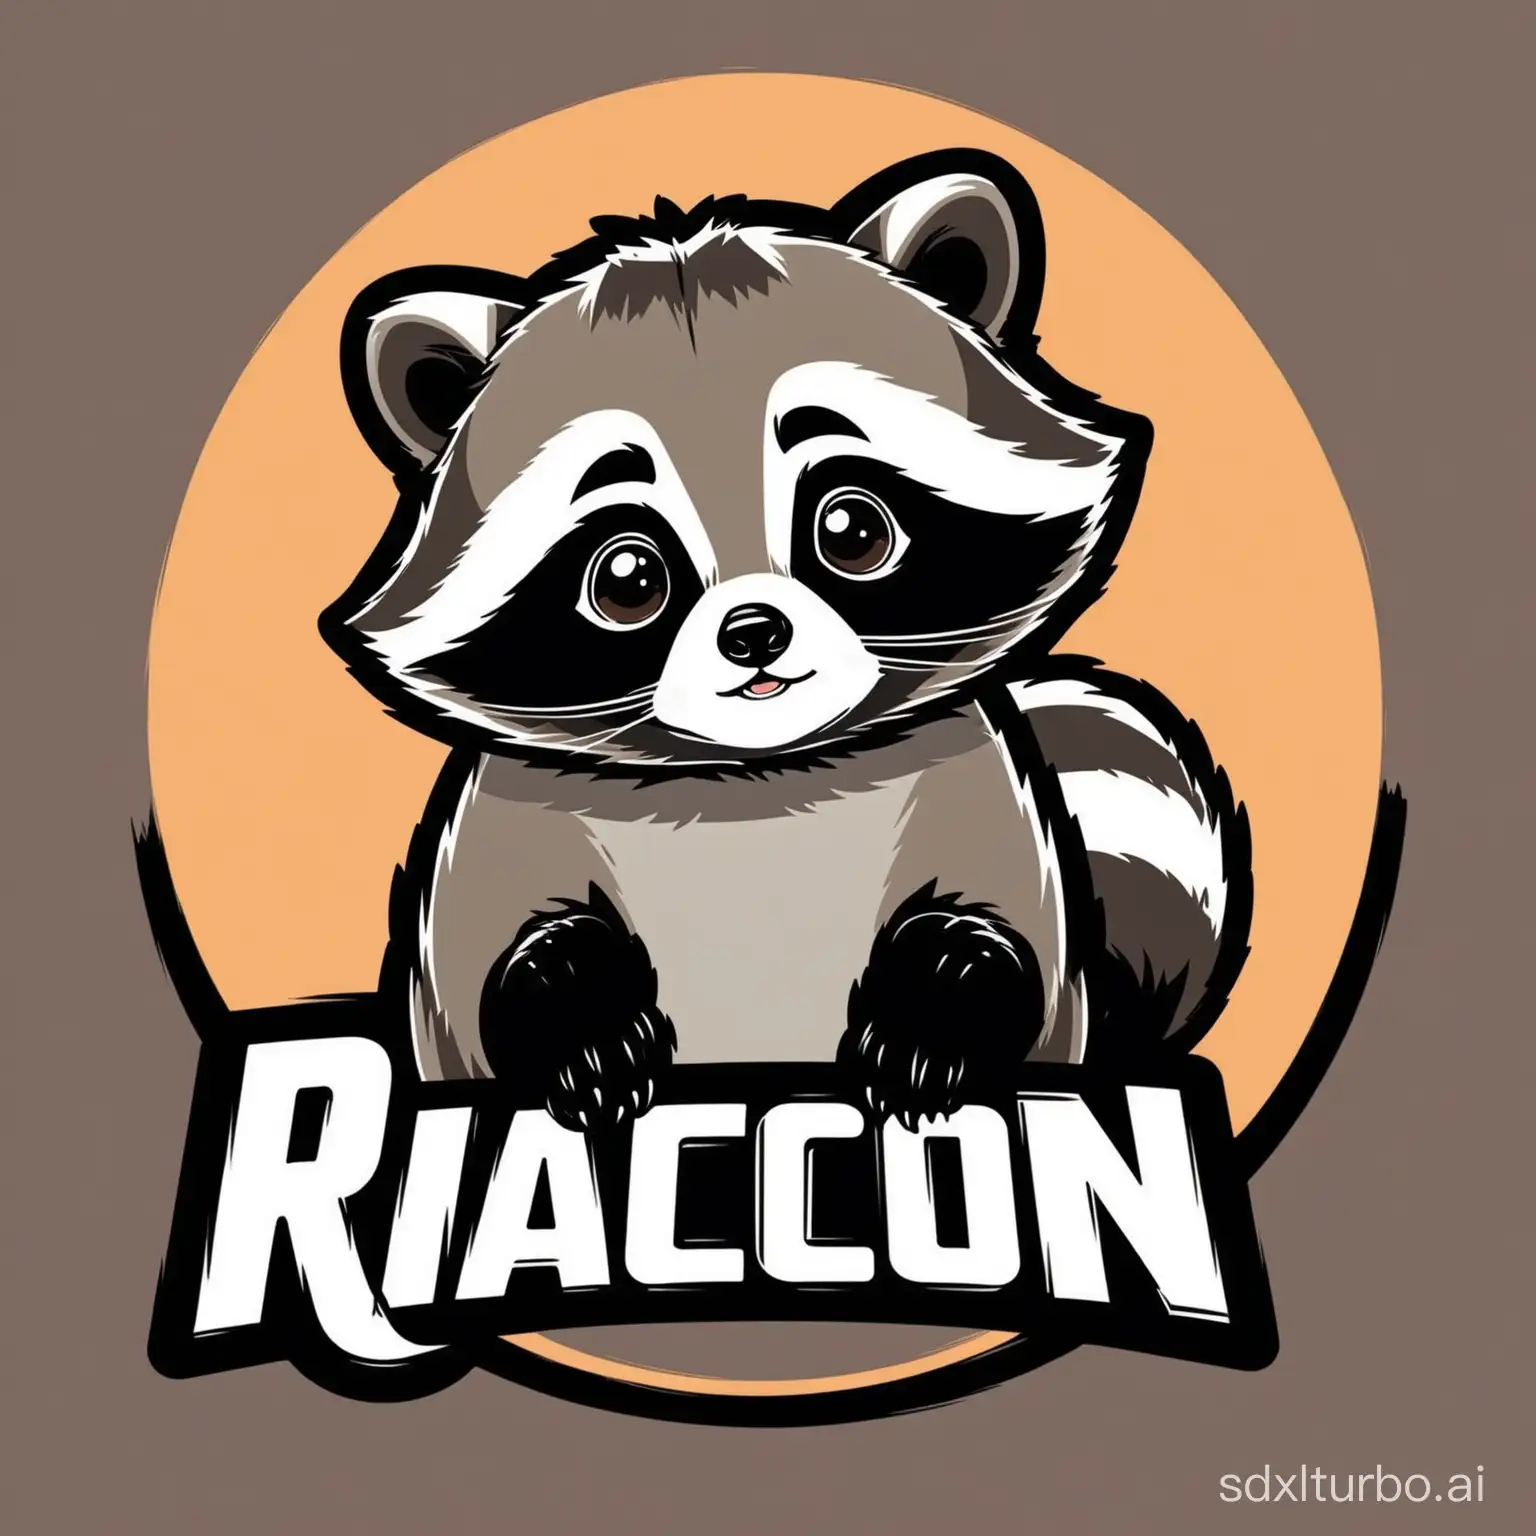 Raccoon, logo, cute